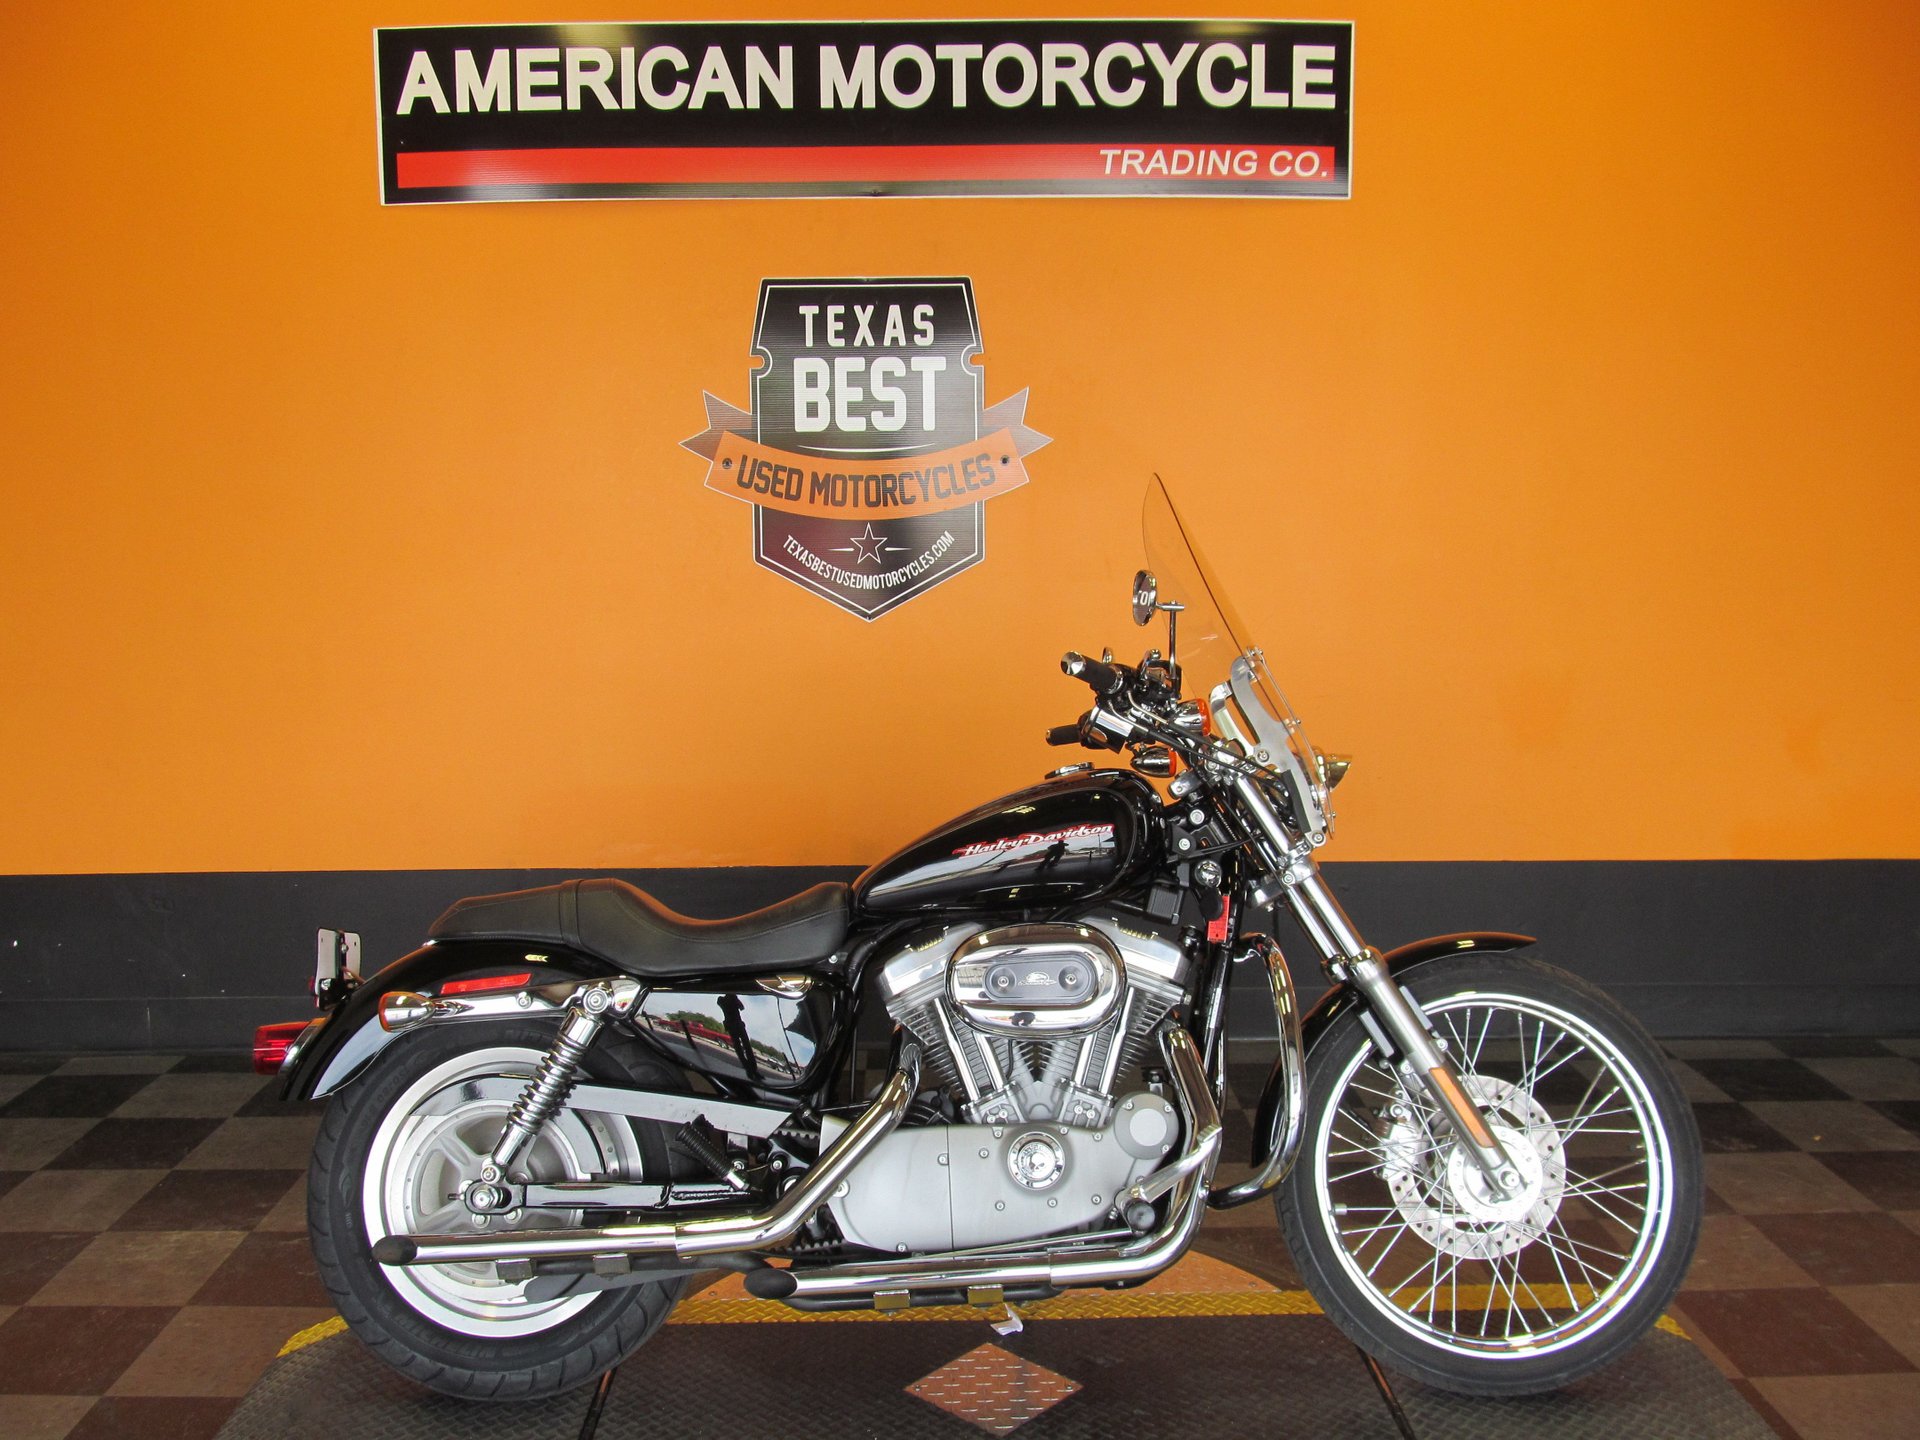 2005 Harley-Davidson Sportster 883 | American Motorcycle Trading Company -  Used Harley Davidson Motorcycles